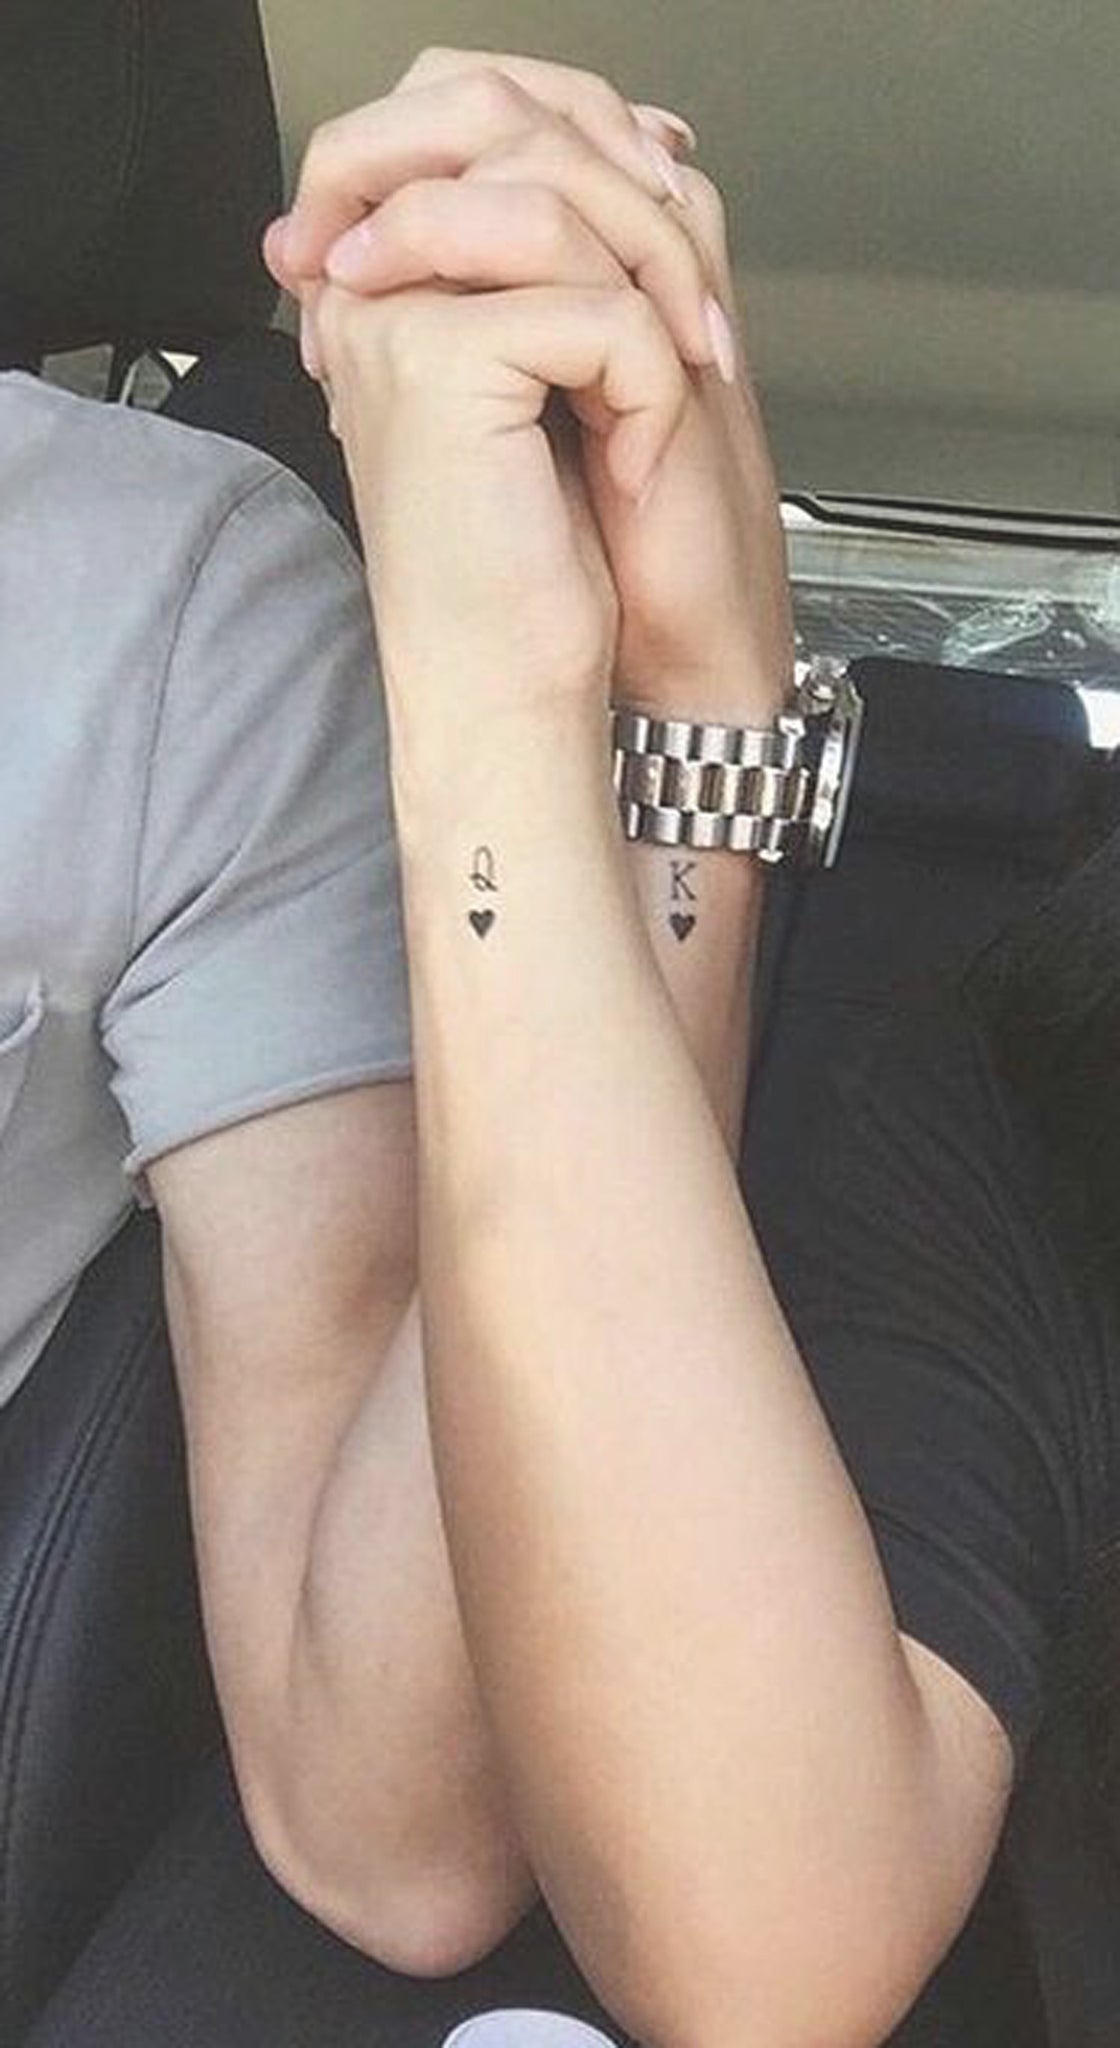 Cute Matching Couple Wrist Tattoo Ideas - Small Queen King Spades Heart Arm Tatouage - Ideas Del Tatuaje - www.MyBodiArt.com 